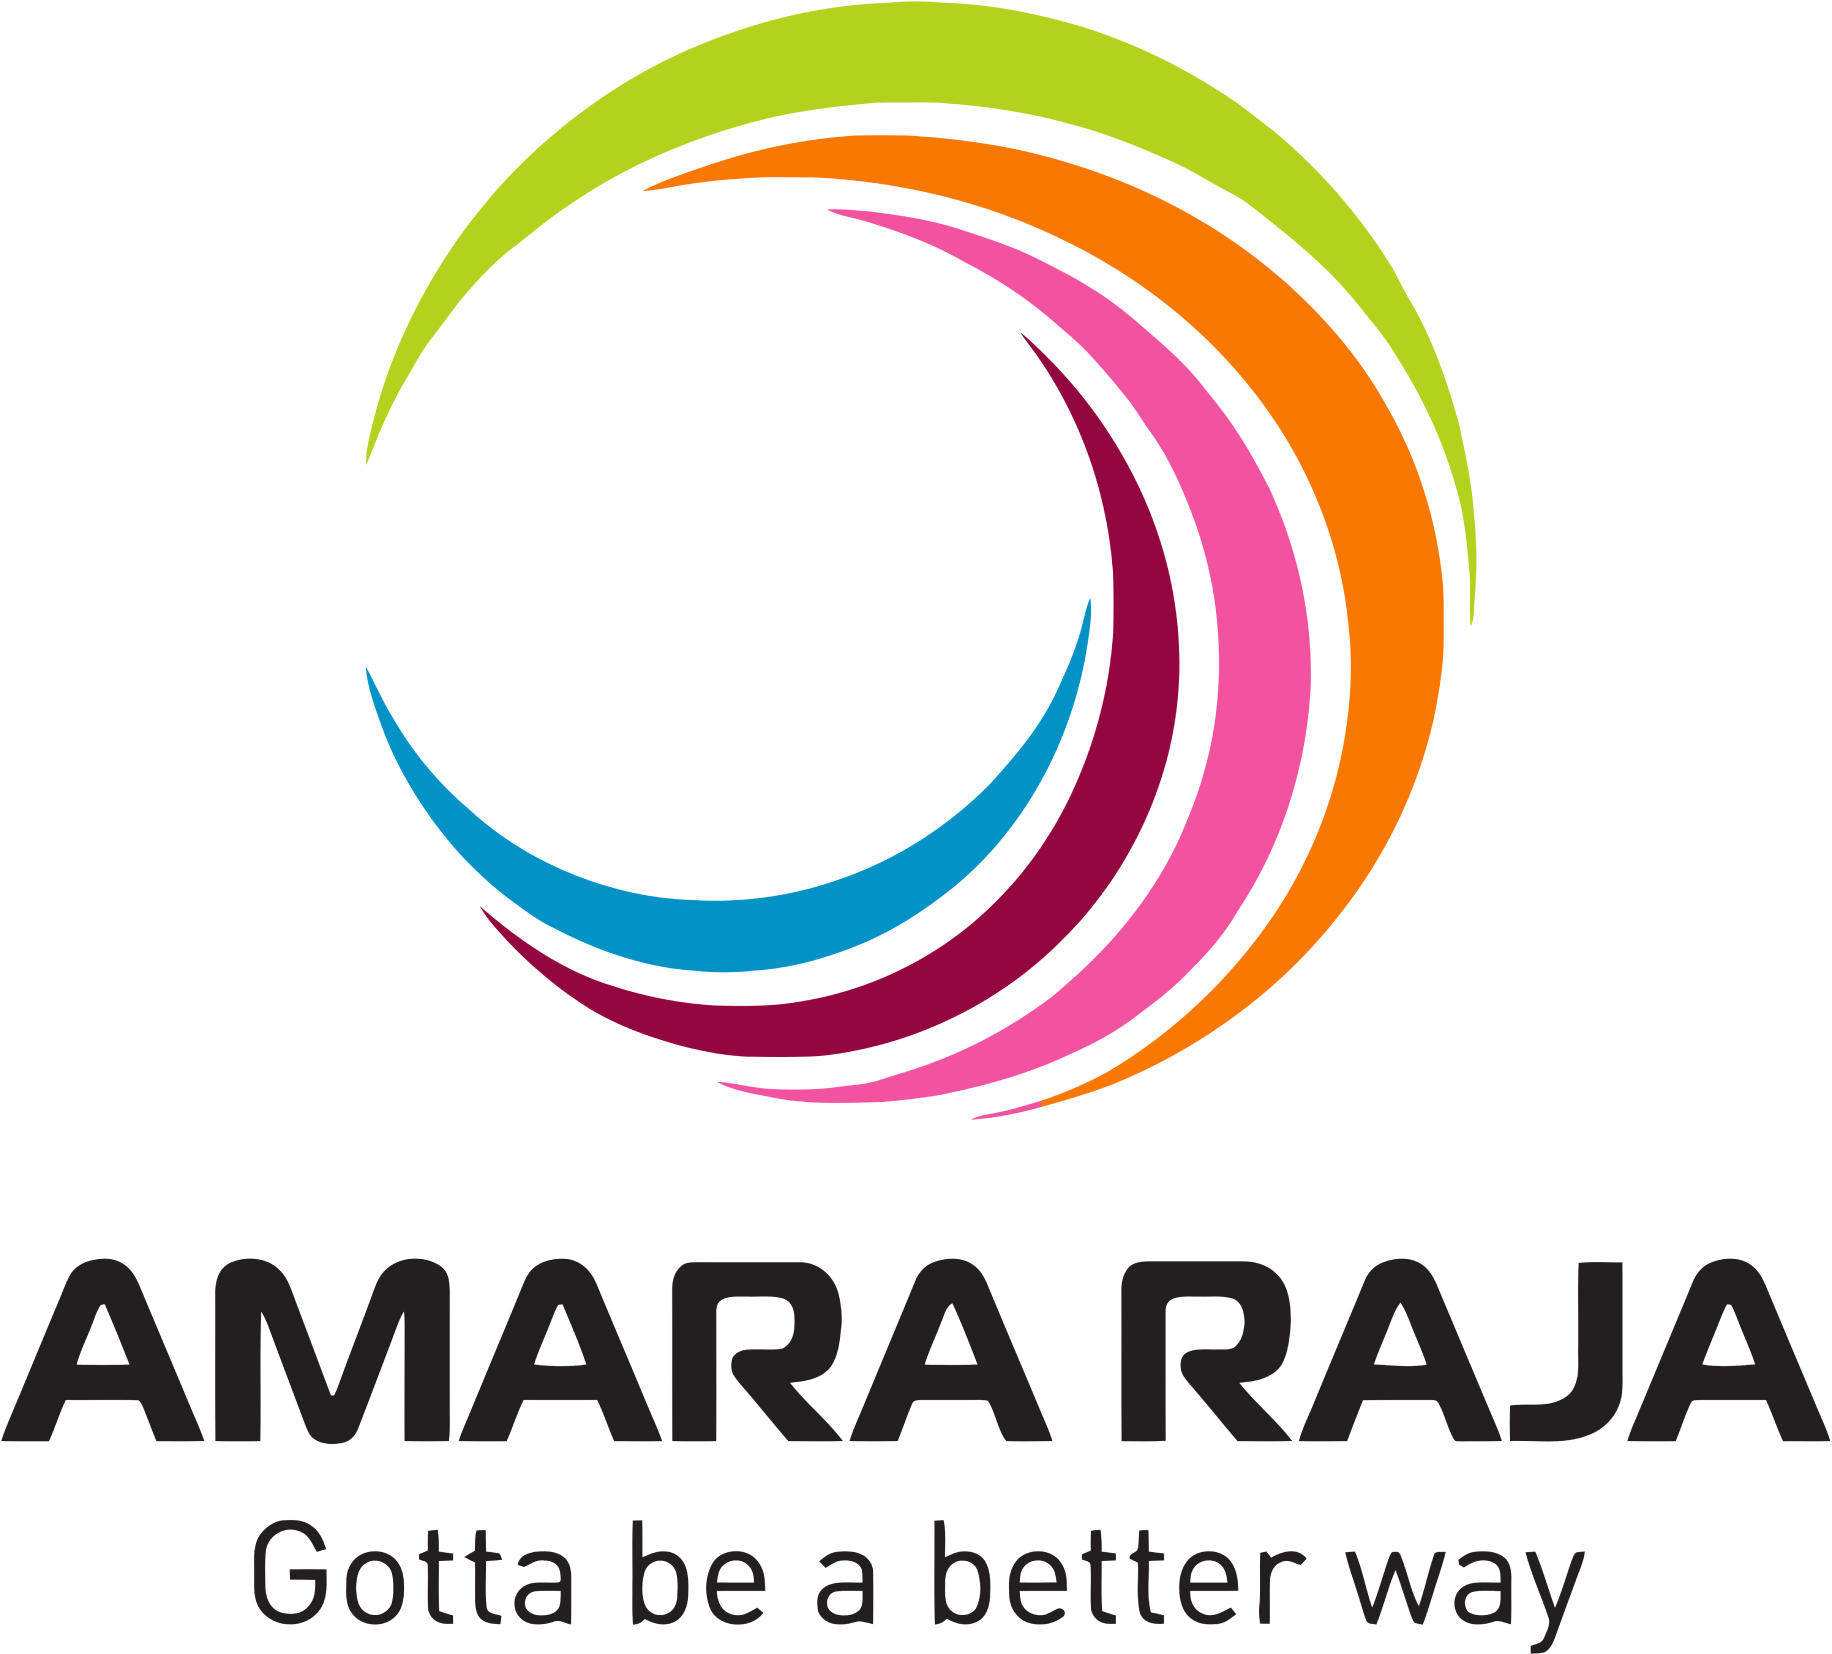 Amara Raja Batteries logo large (transparent PNG)